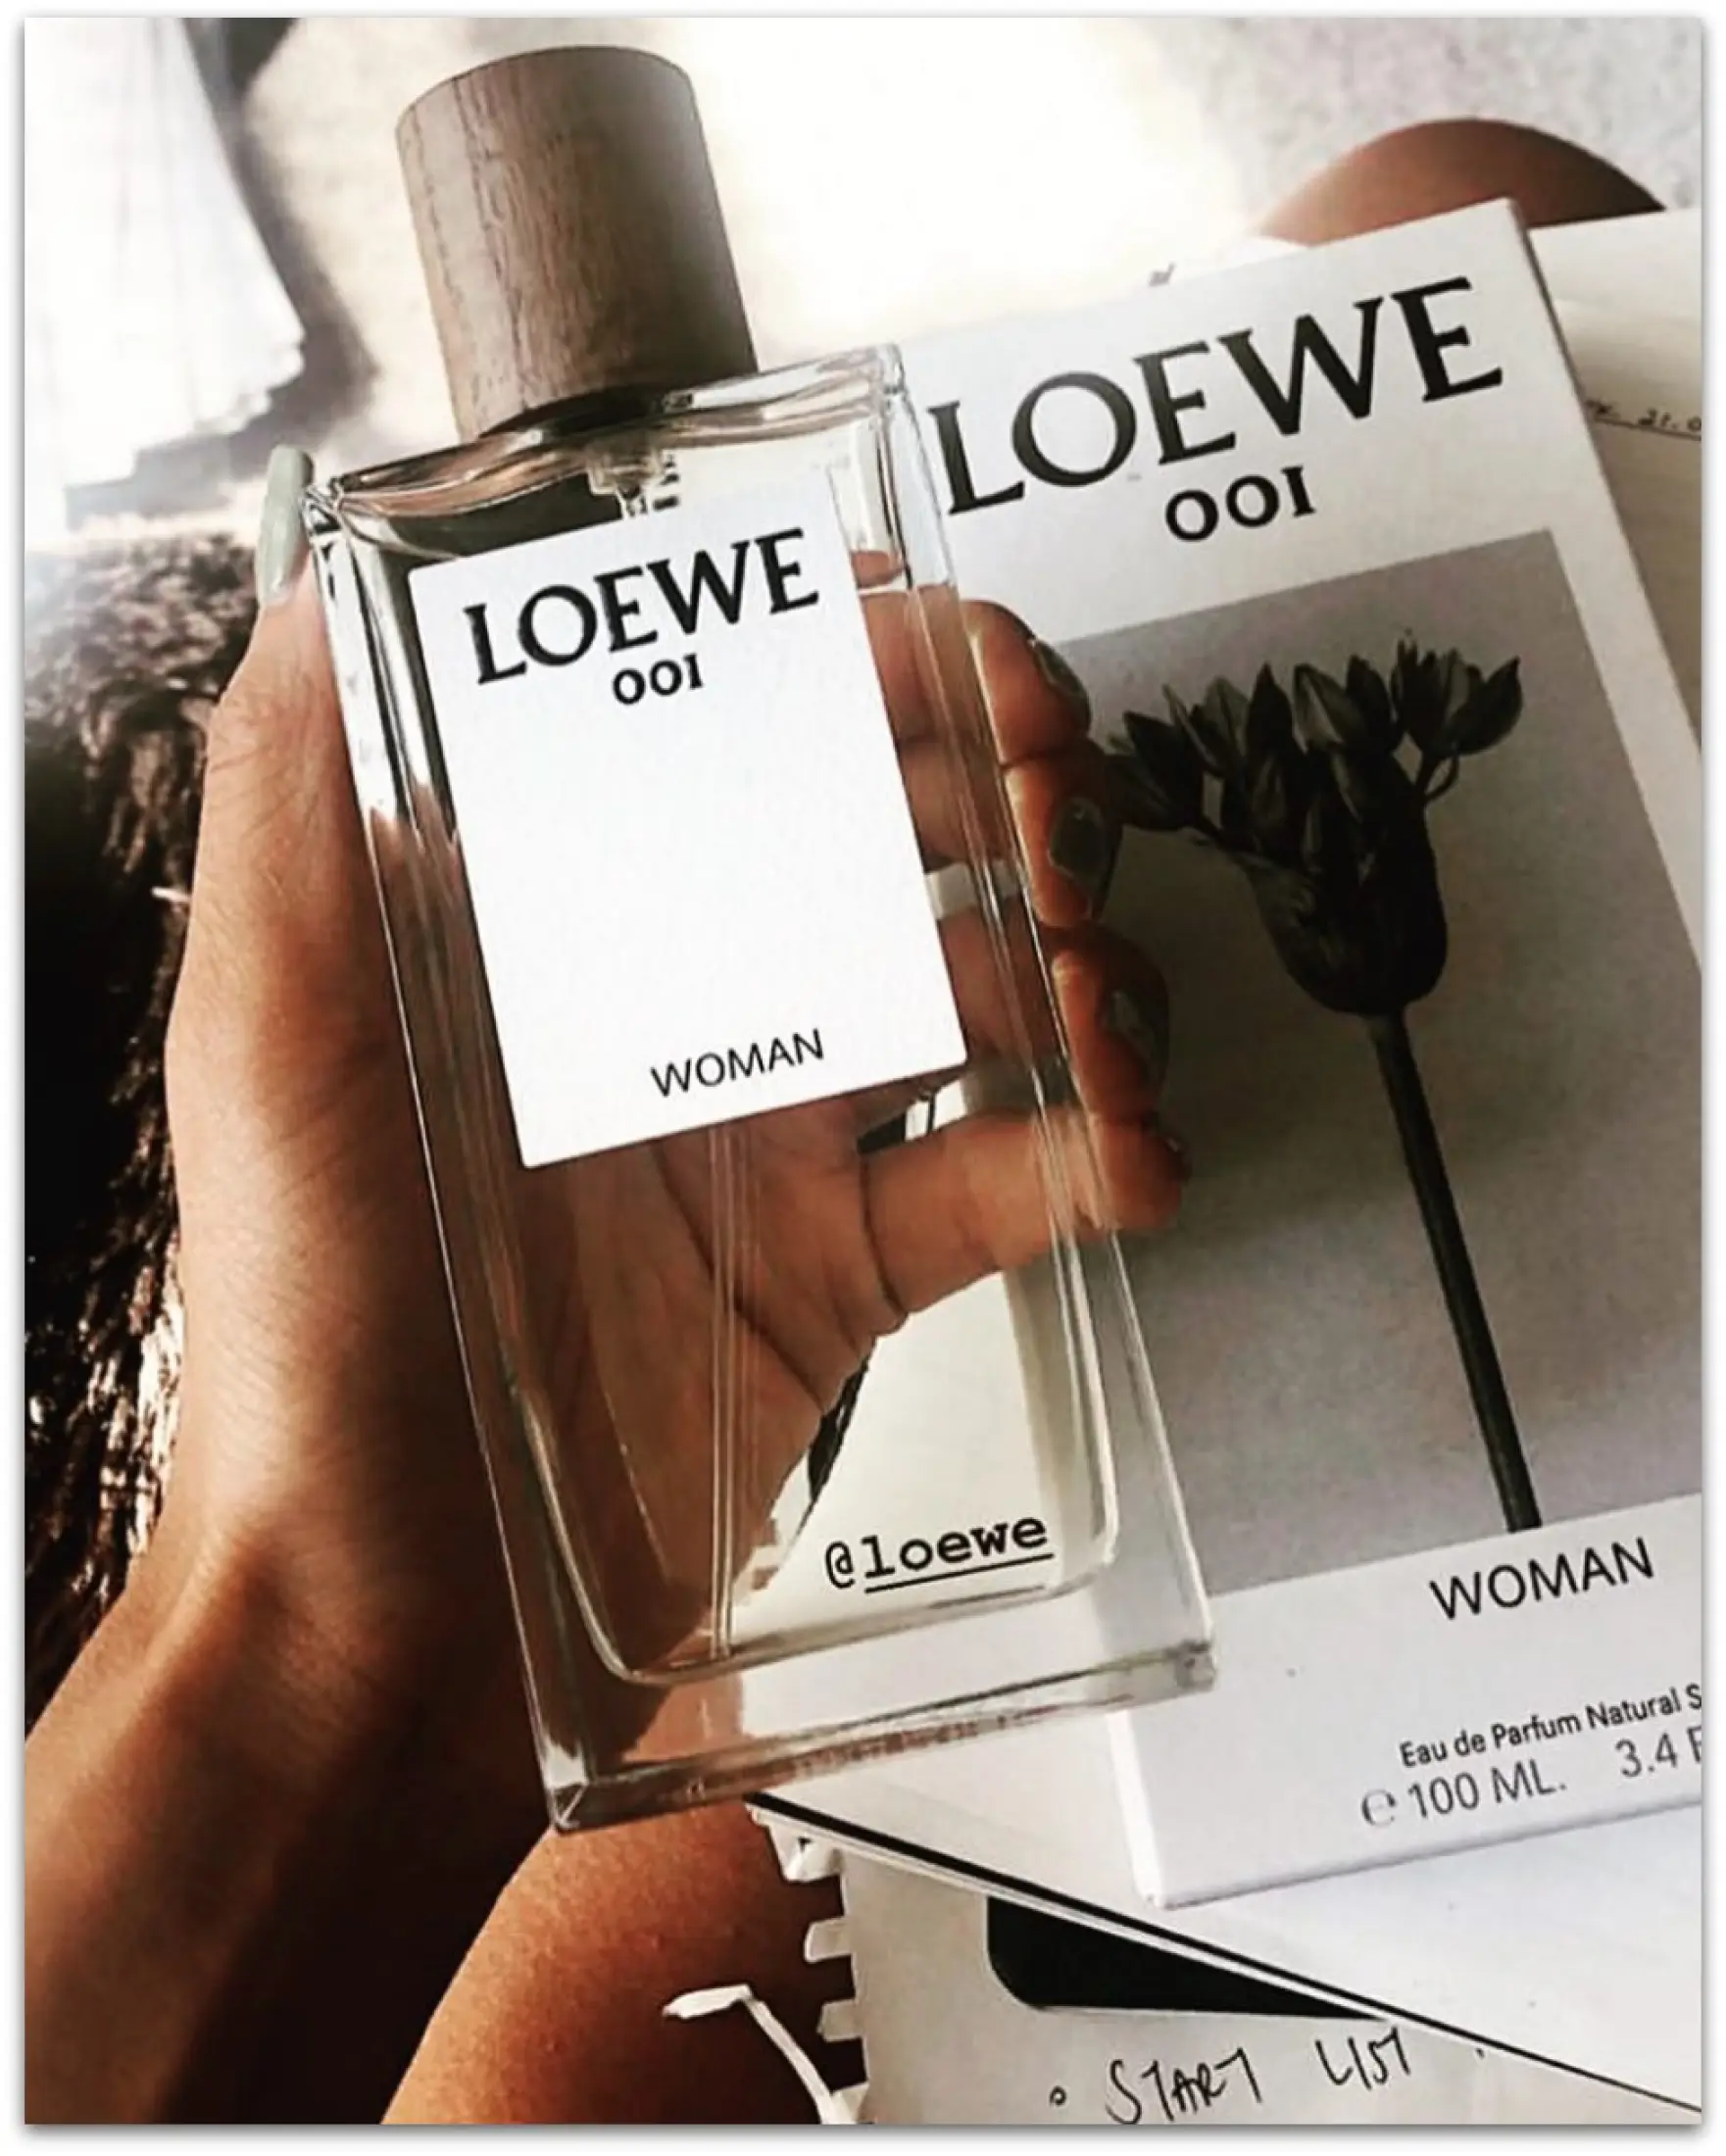 Loewe 001 Eau de Parfum for Women 100ml 